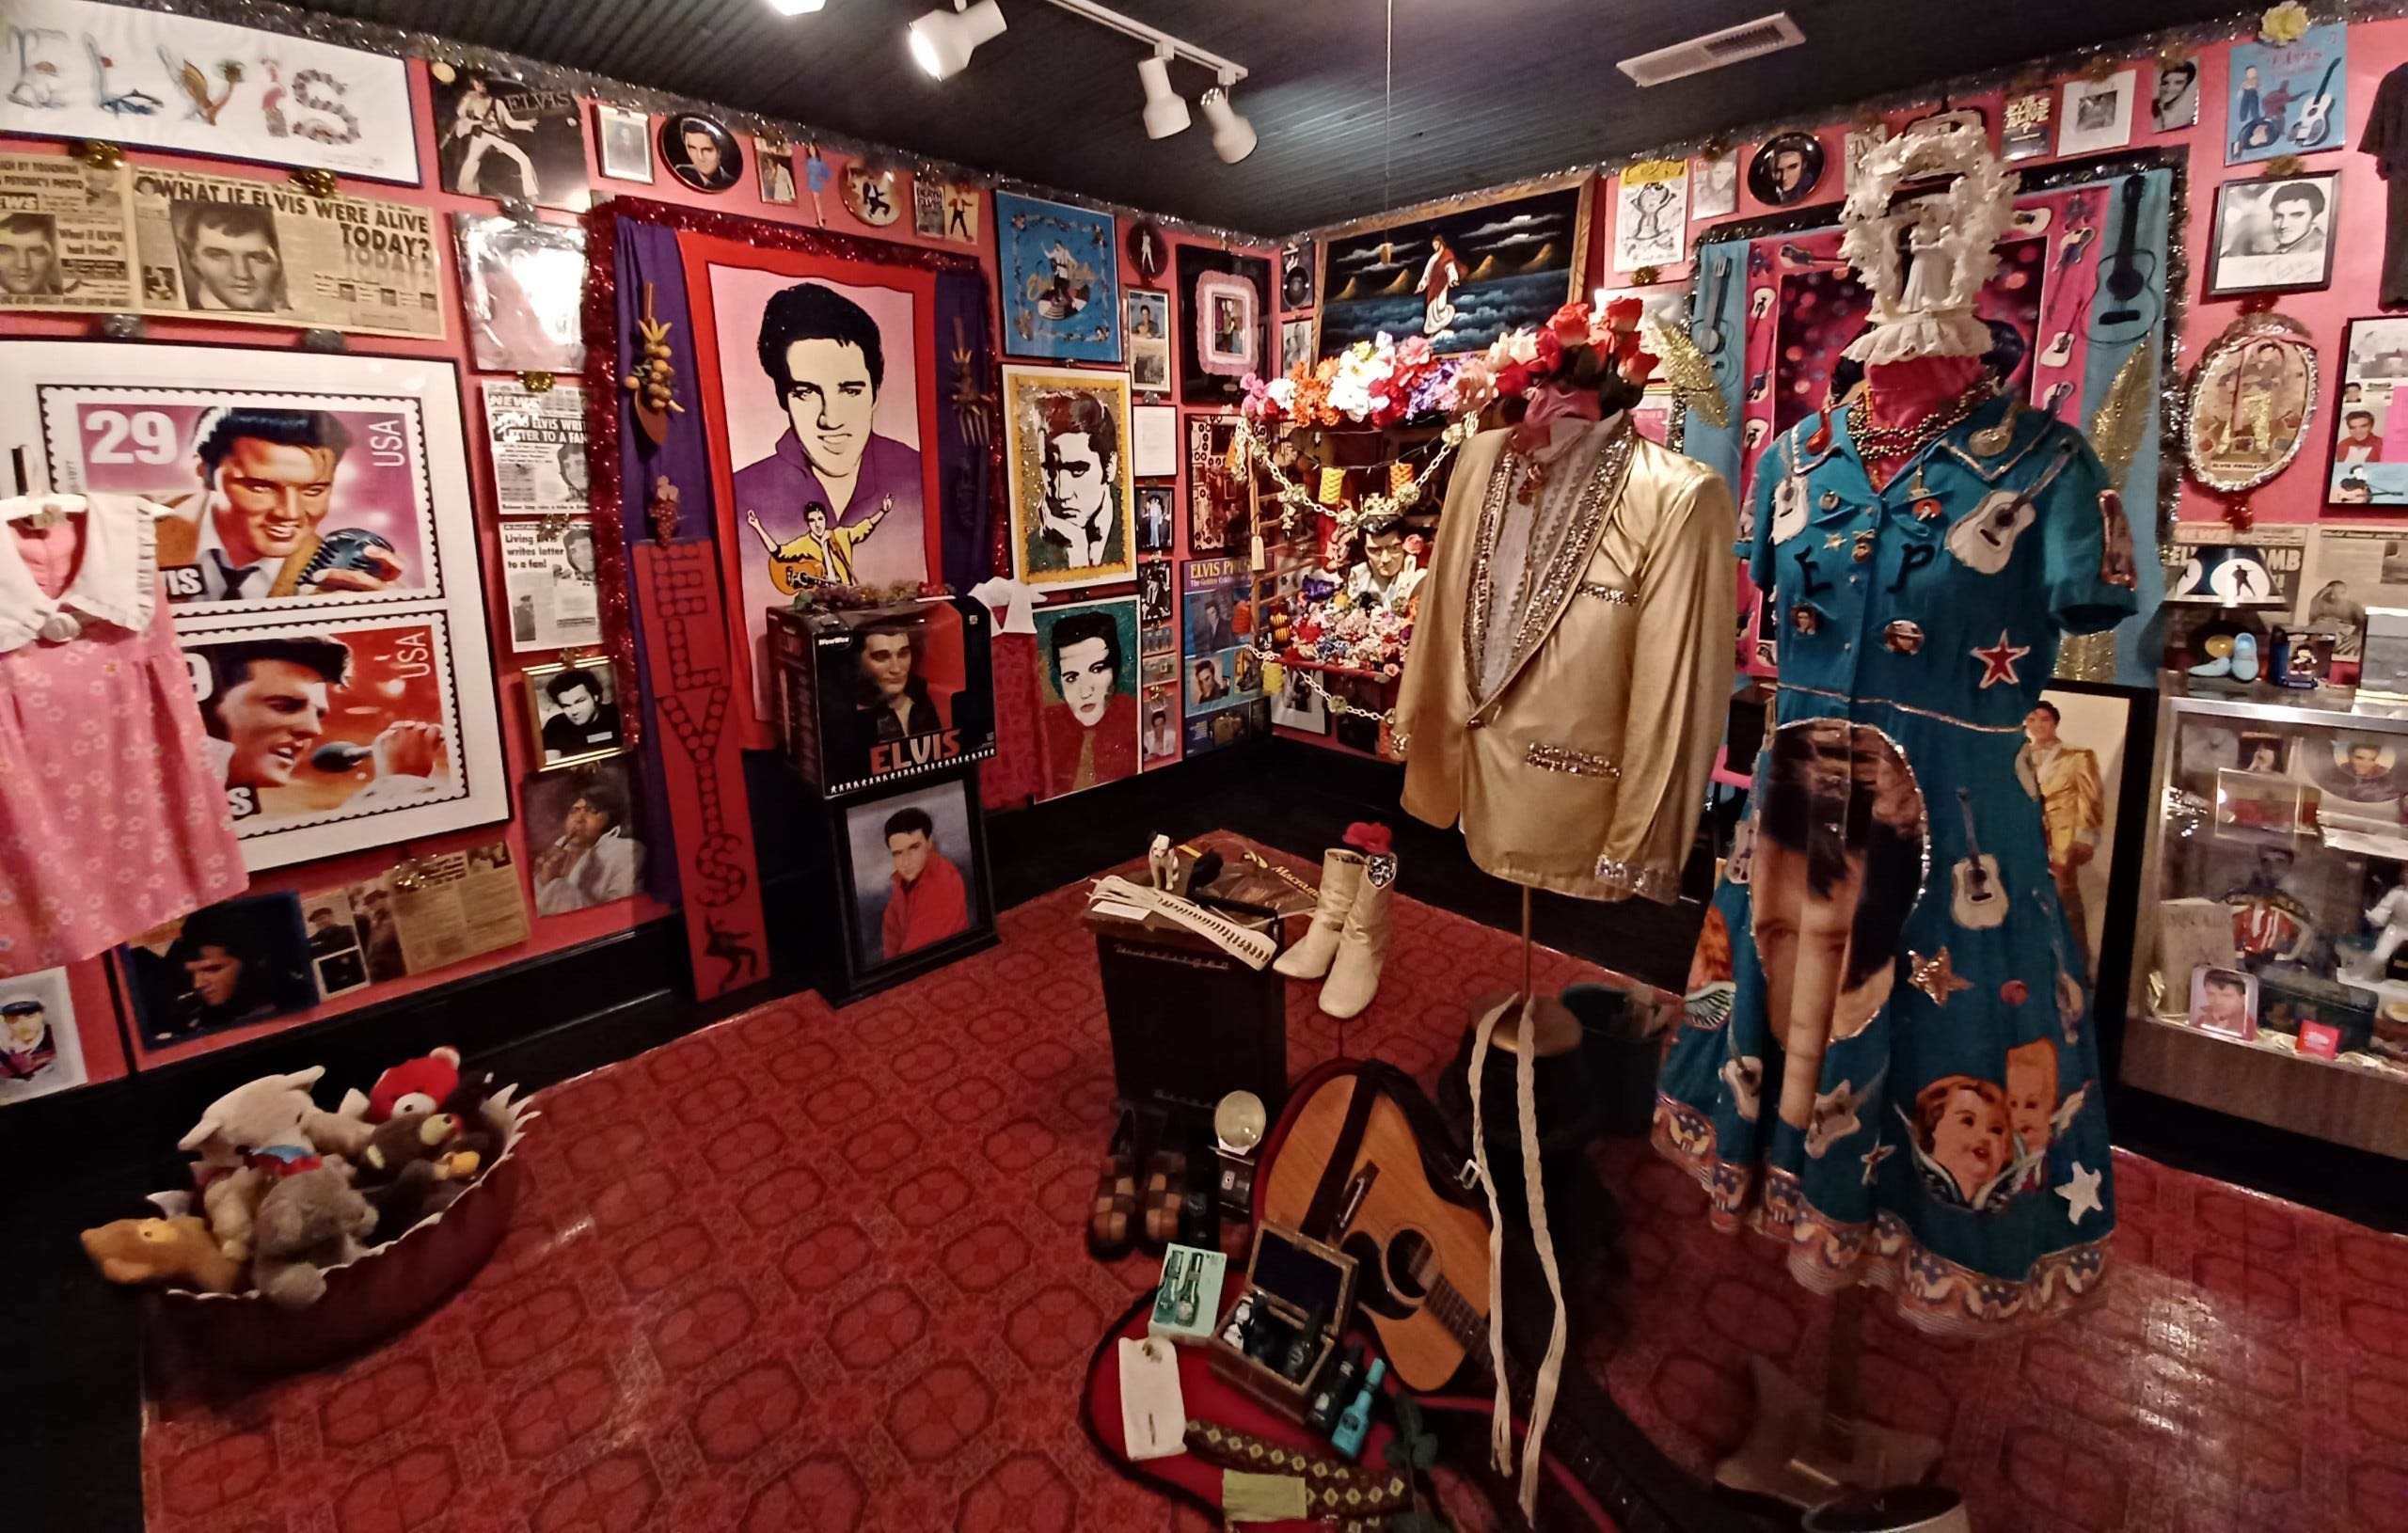 Stranger things in Georgia: Elvis art, clothing and...flesh? This Cornelia museum has it all